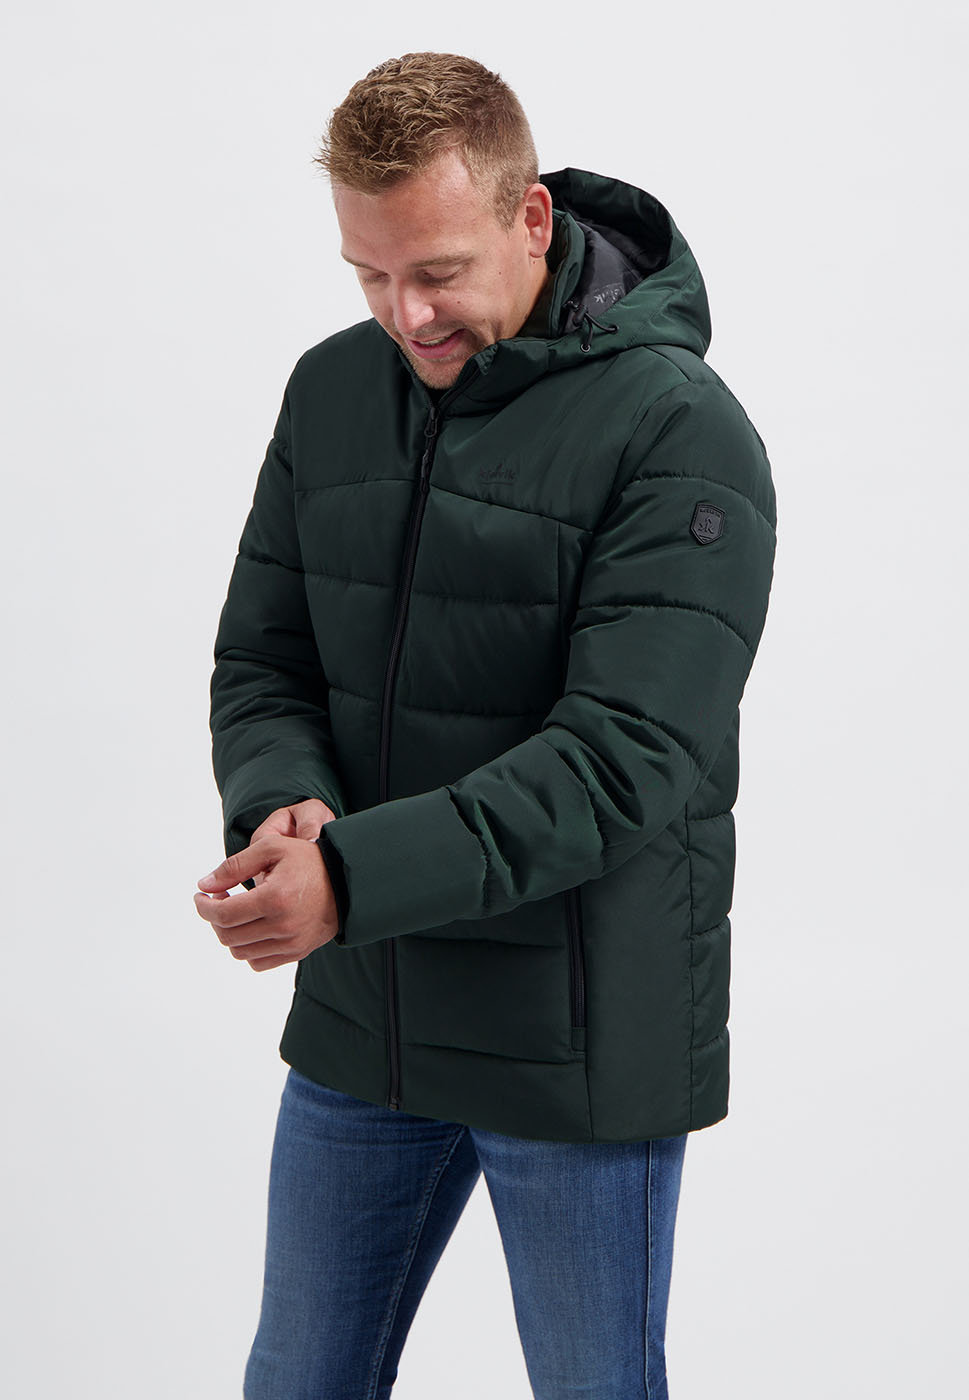 Kjelvik Scandinavian Clothing - Men Jackets Faris Green